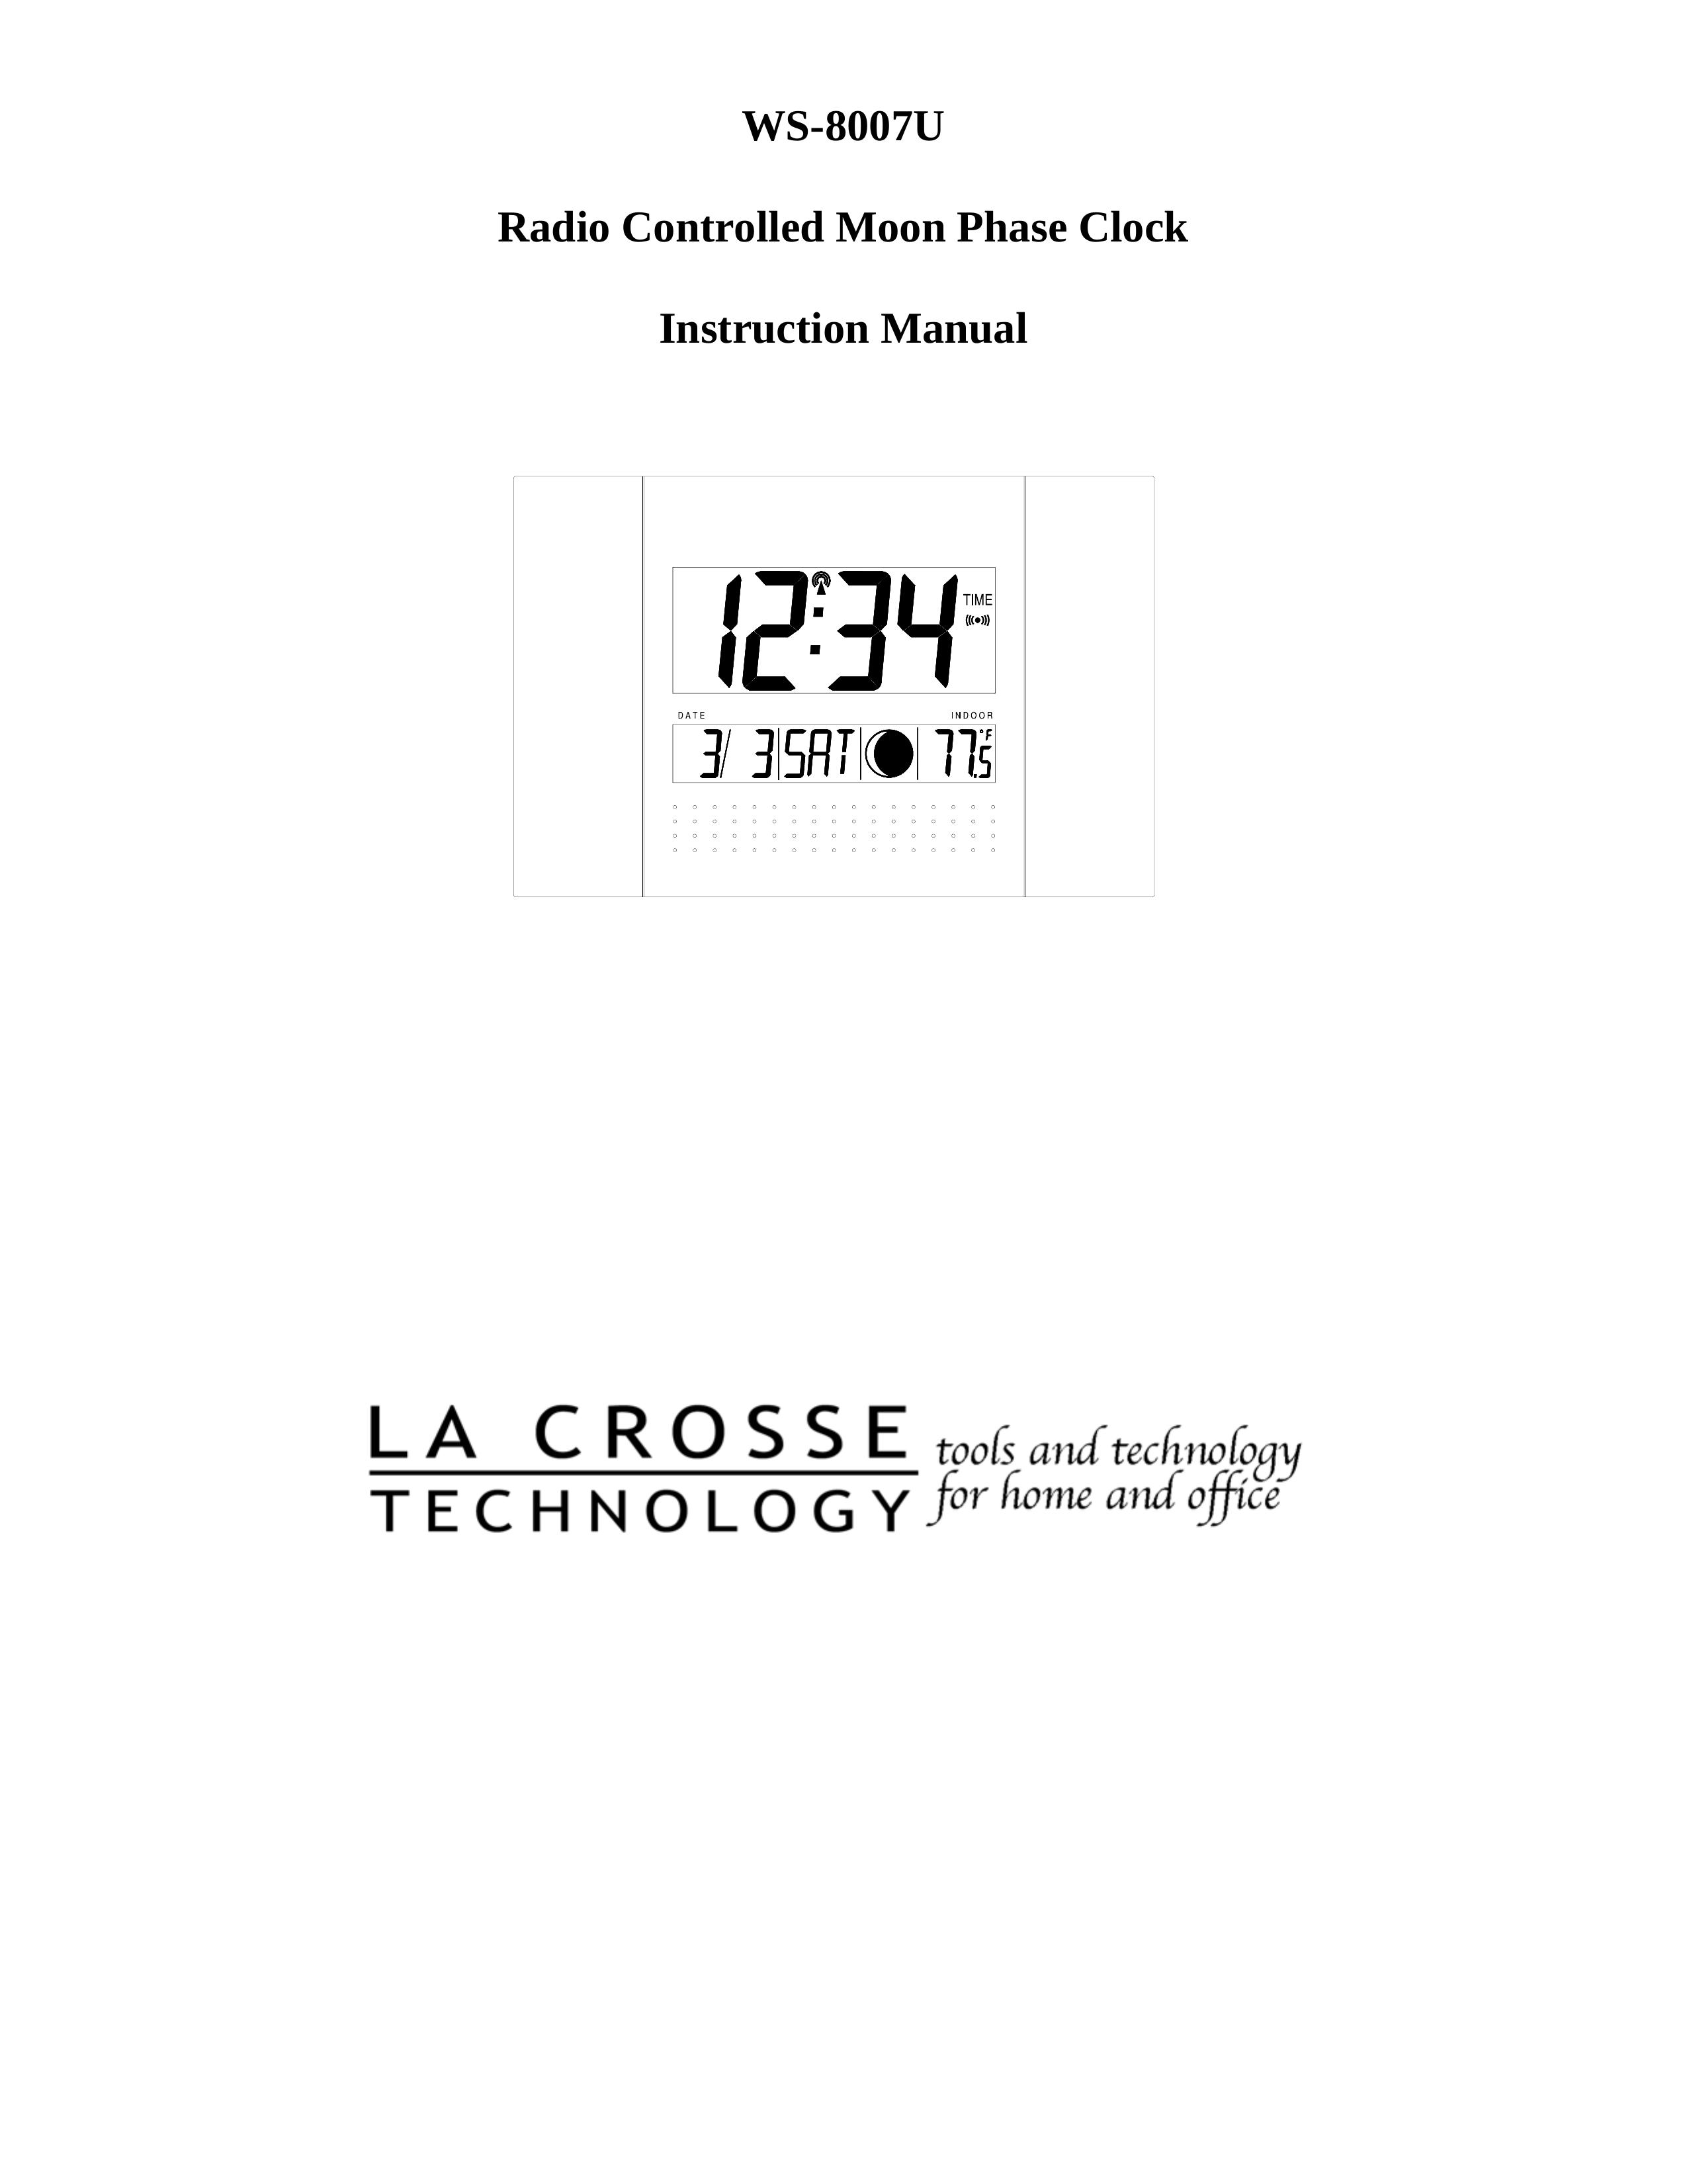 La Crosse Technology WS-8007U Clock Radio User Manual